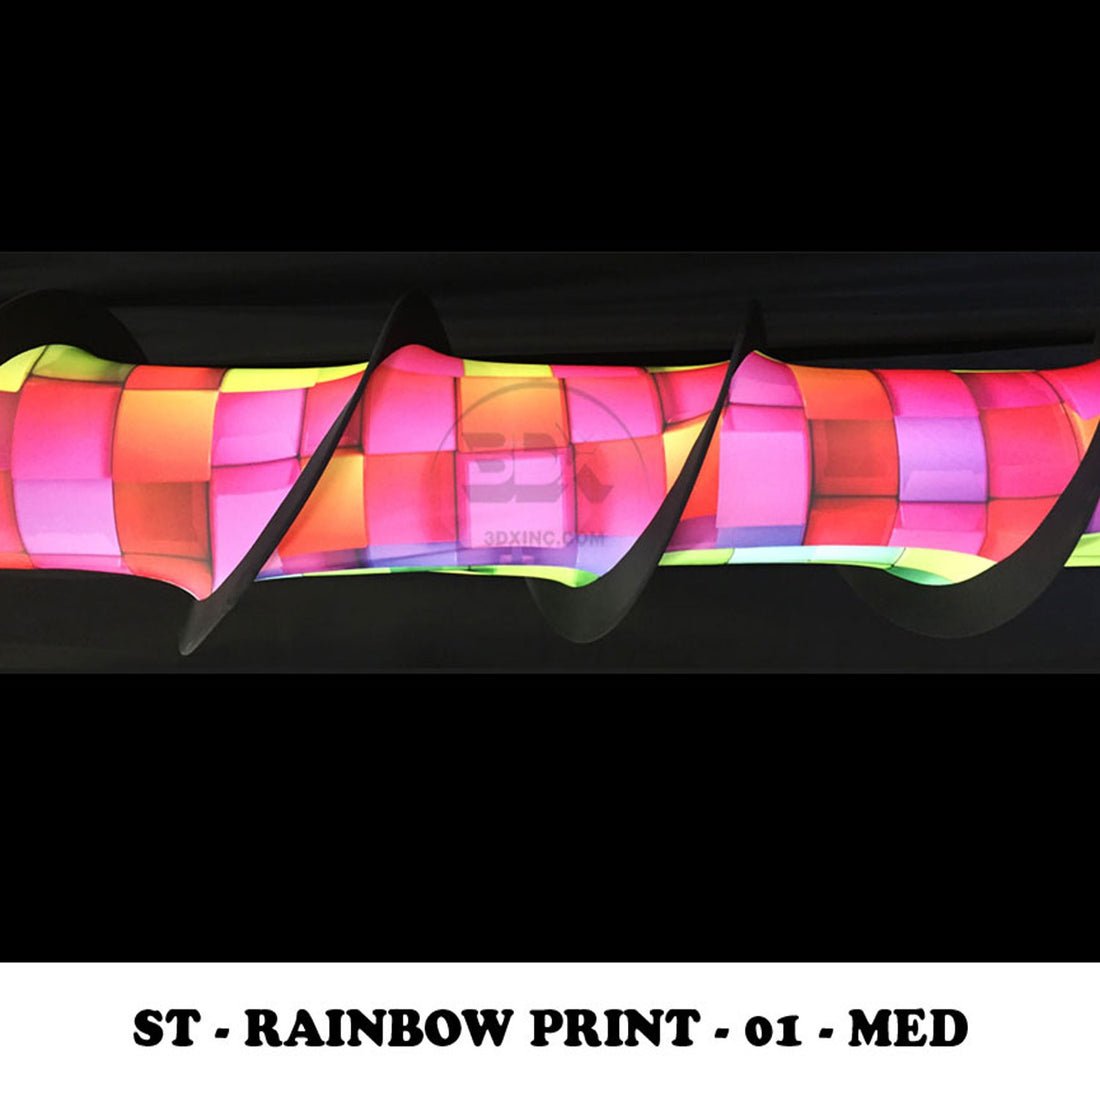 ST - RAINBOW PRINT - 01 - MED